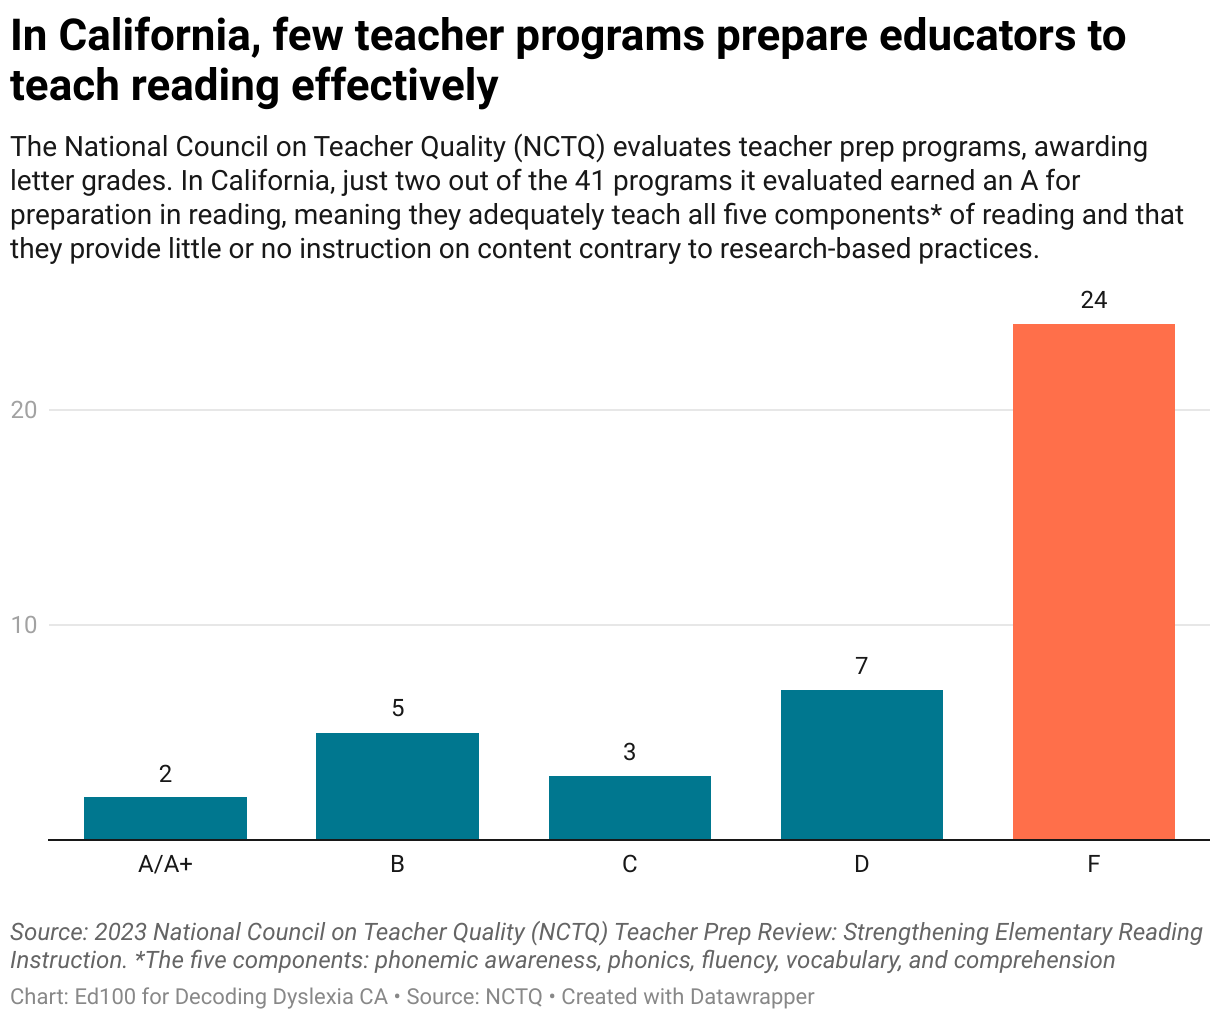 In California, few teacher programs prepare educators effectively to teach reading